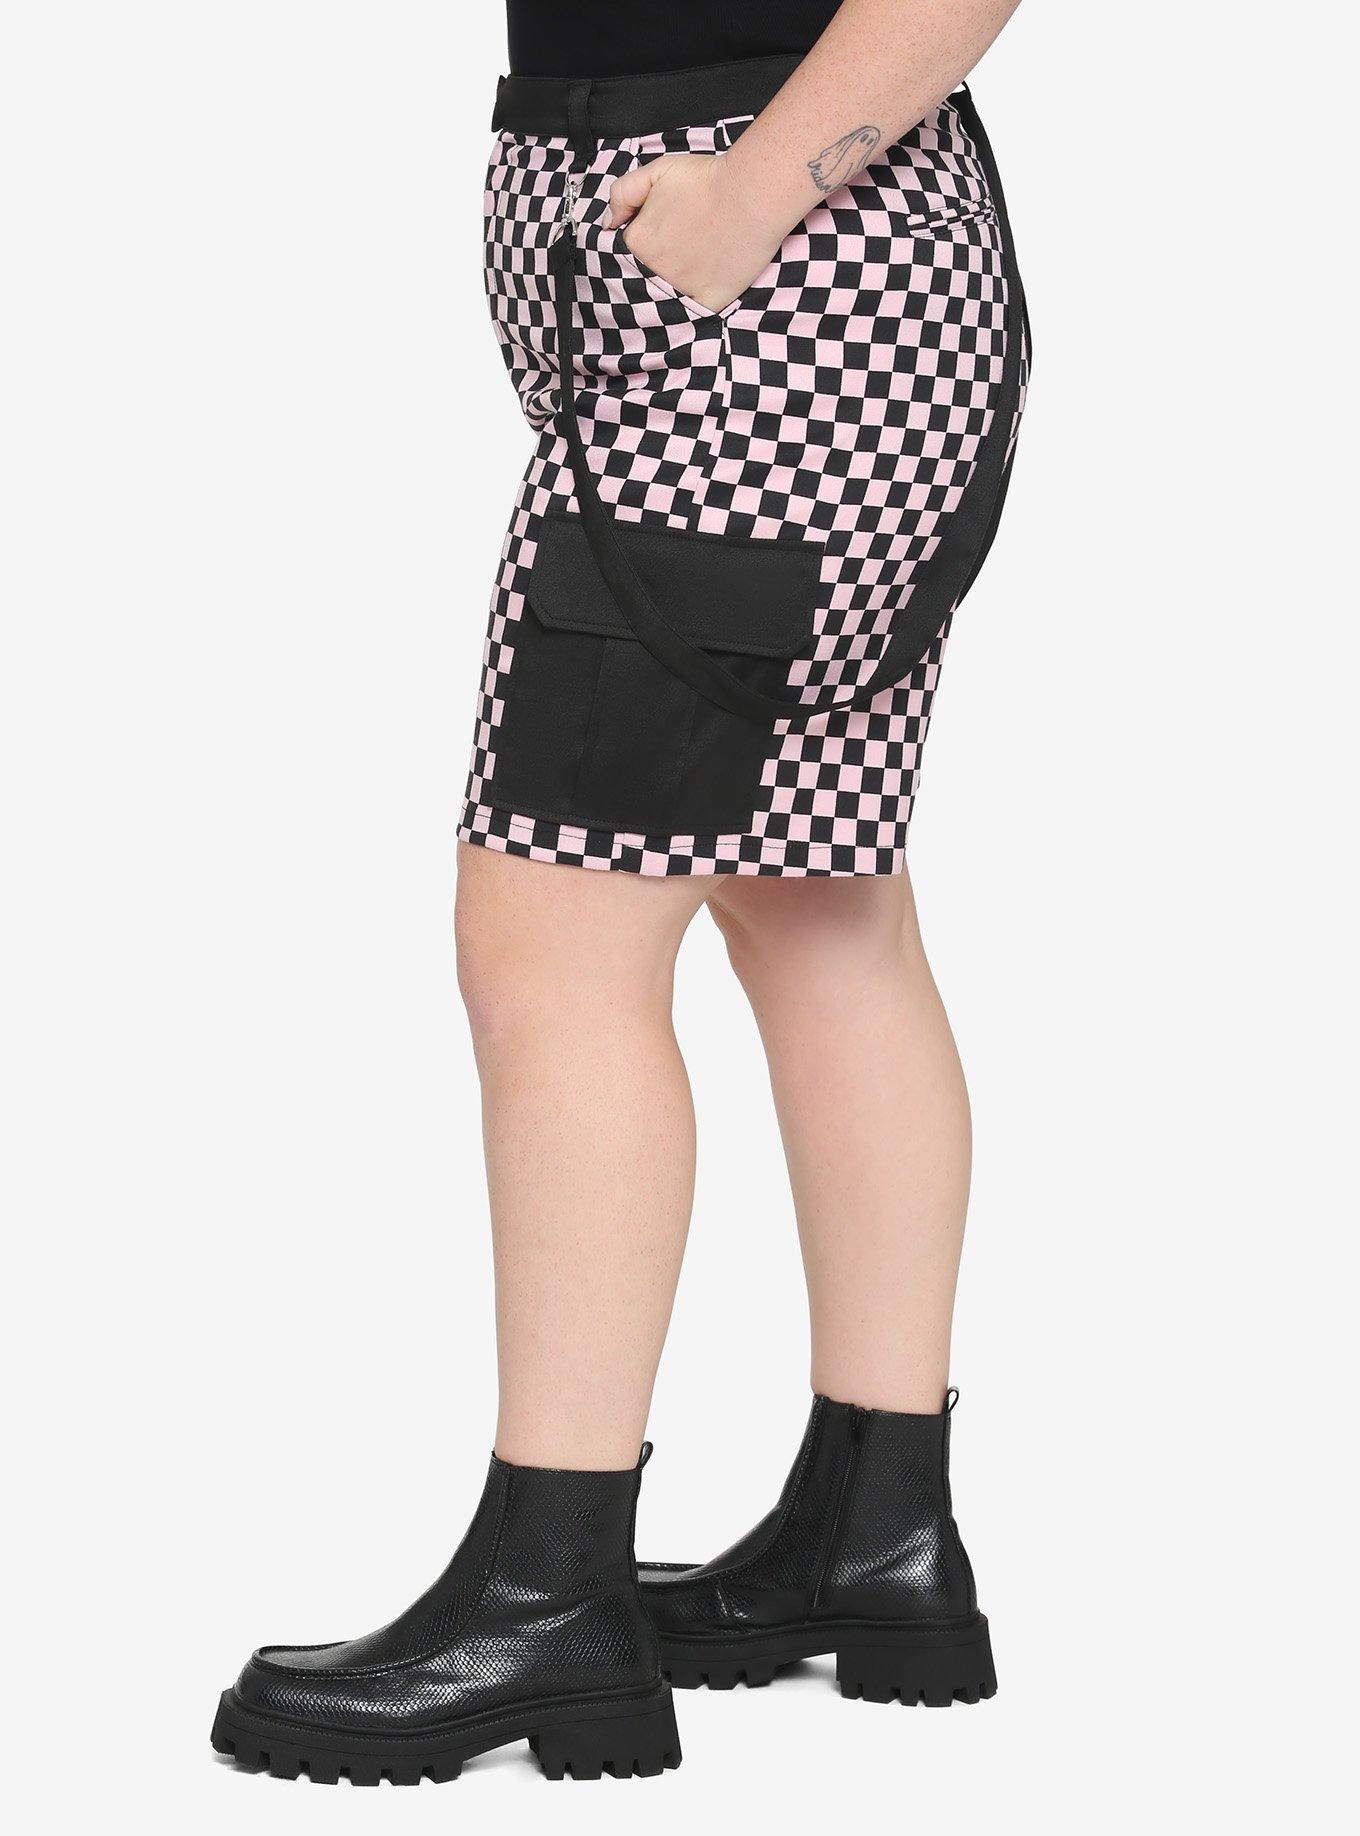 Black & Pink Split Checkered Suspender Shorts Plus Size, LIGHT PINK, alternate